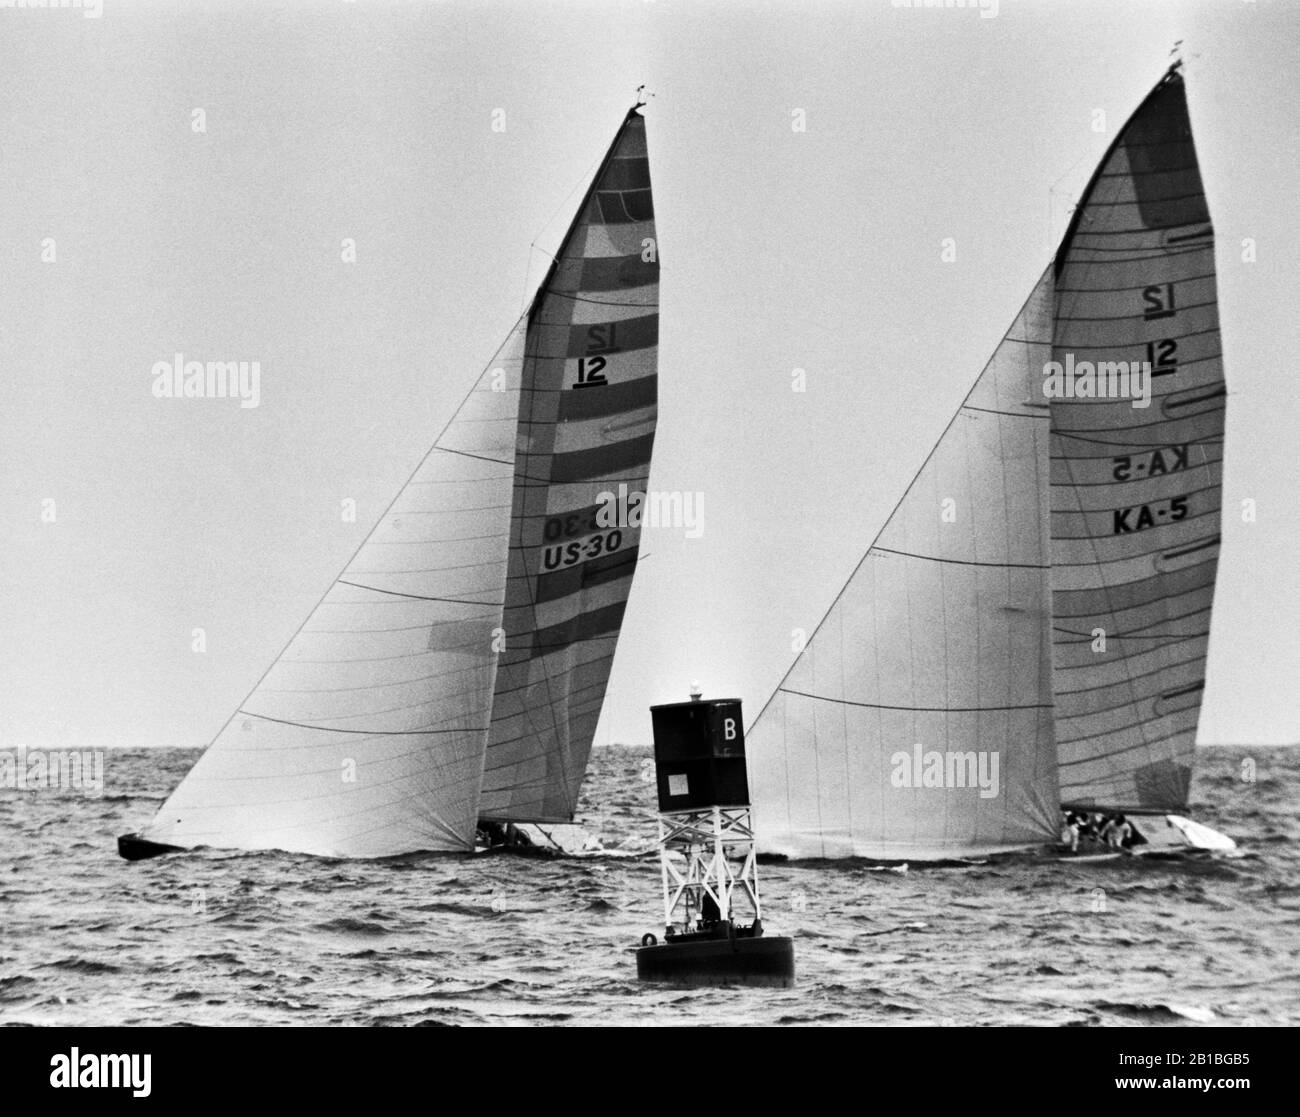 AJAXNETPHOTO. 26TH SEP 1980. NEWPORT, RHODE ISLAND, USA. - AMERICA'S CUP - FREEDOM (US-30) SKIPPERED BY DENNIS CONNER LEADS AUSTRALIA (KA-5)  AT THE START.  PHOTO:JONATHAN EASTLAND/AJAX REF:80926 2A Stock Photo